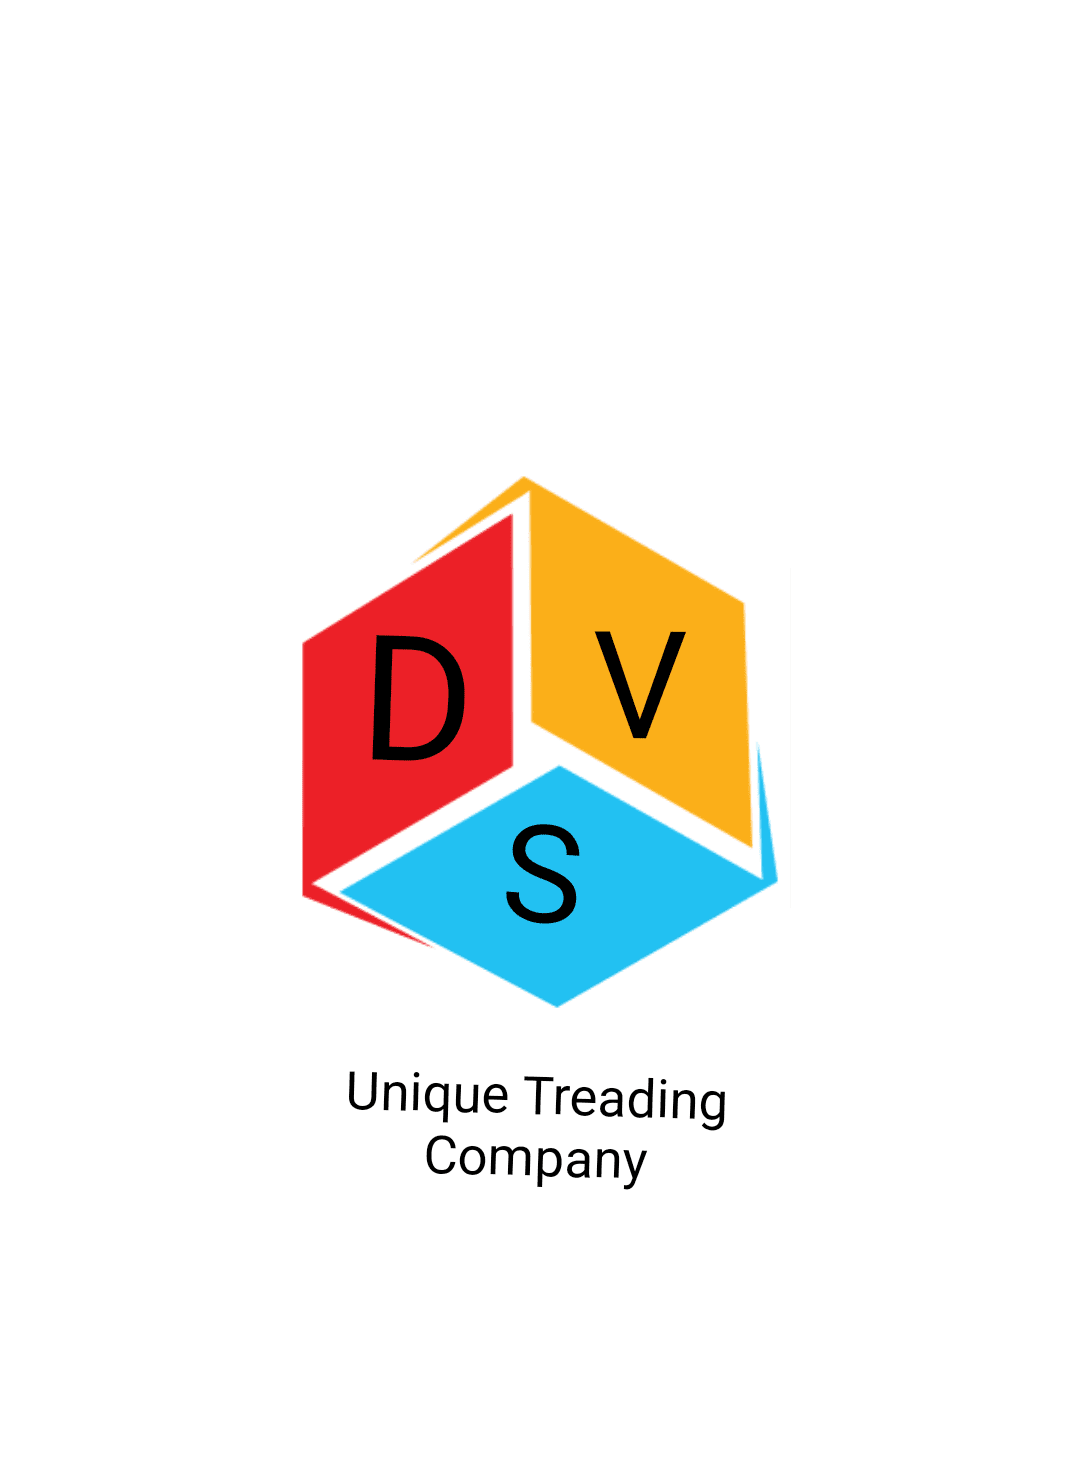 DVS Group